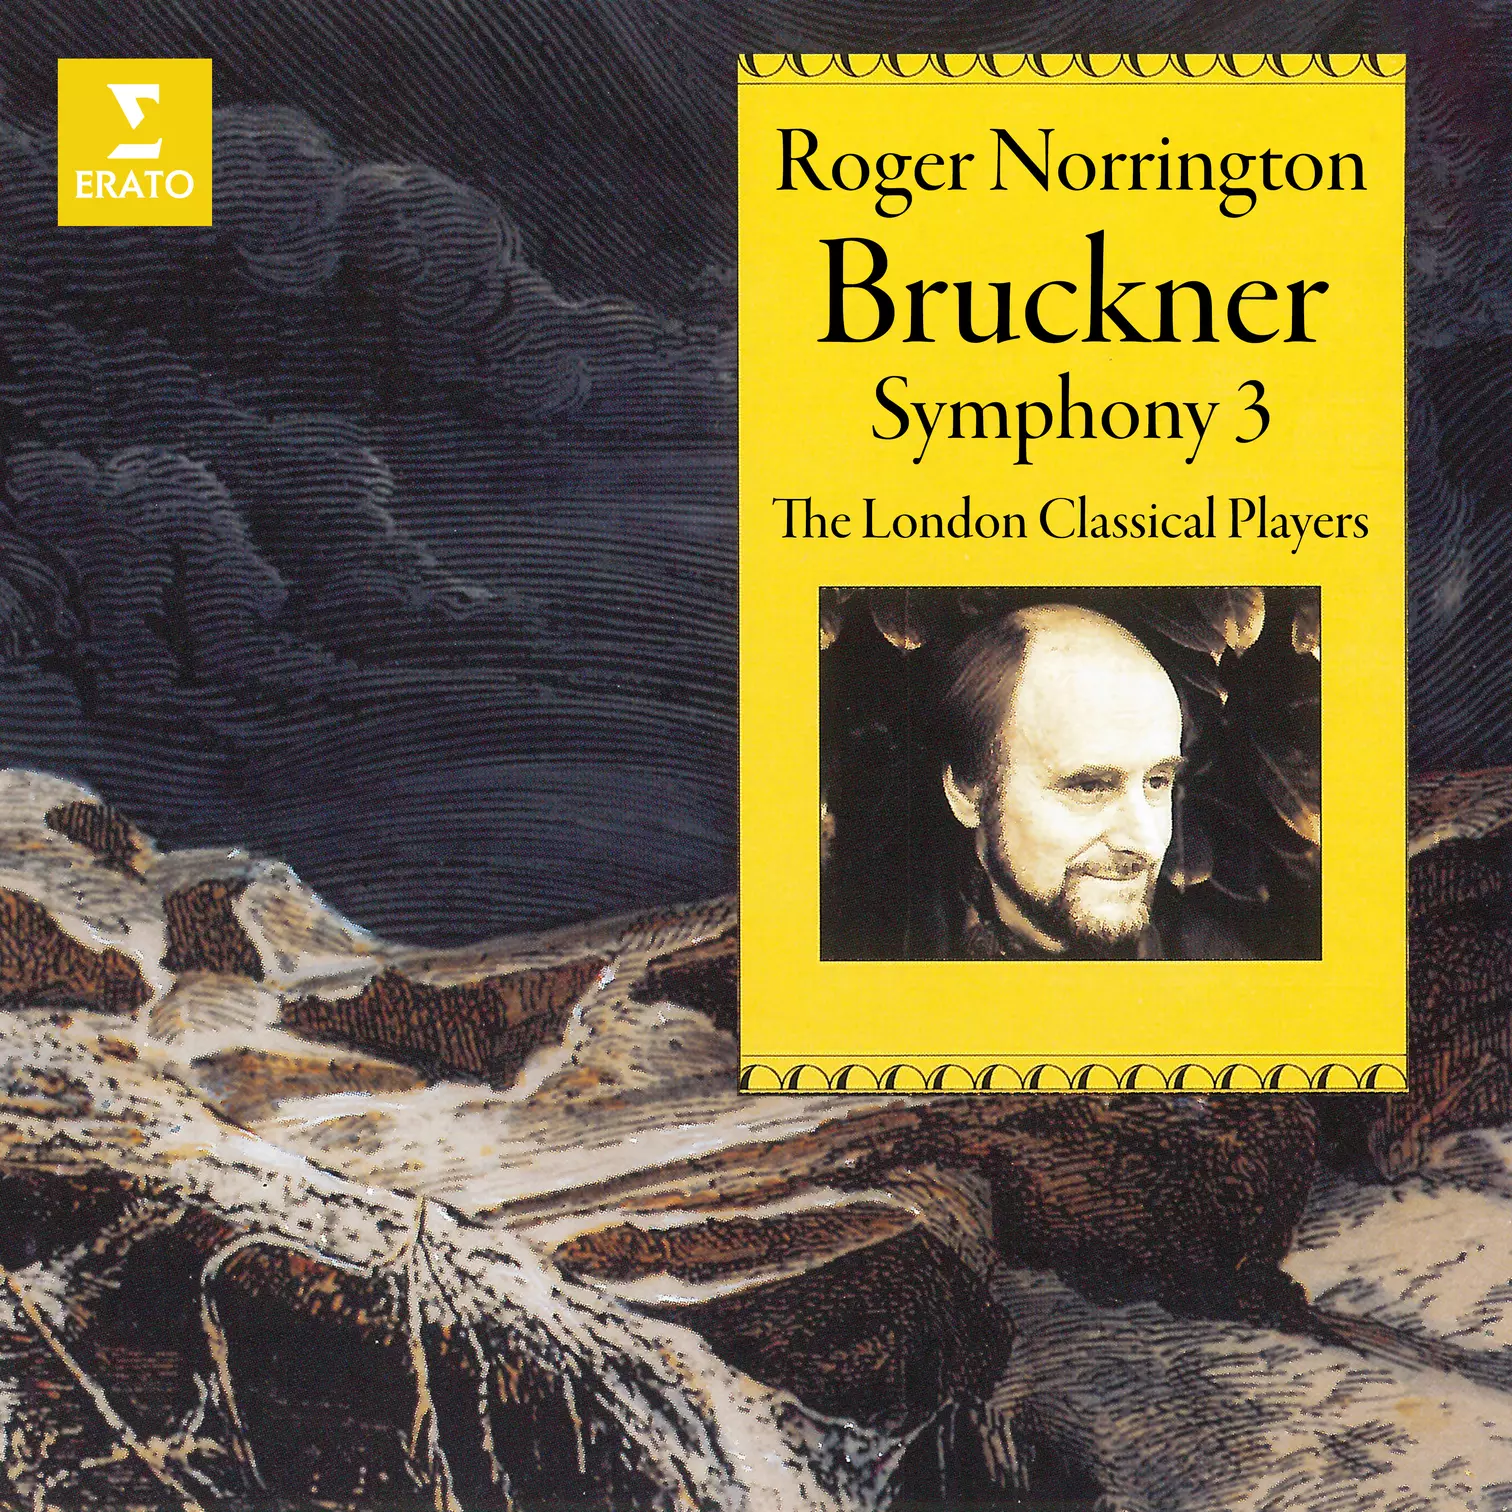 Bruckner: Symphony No. 3 "Wagner Symphony" (1873 Version)